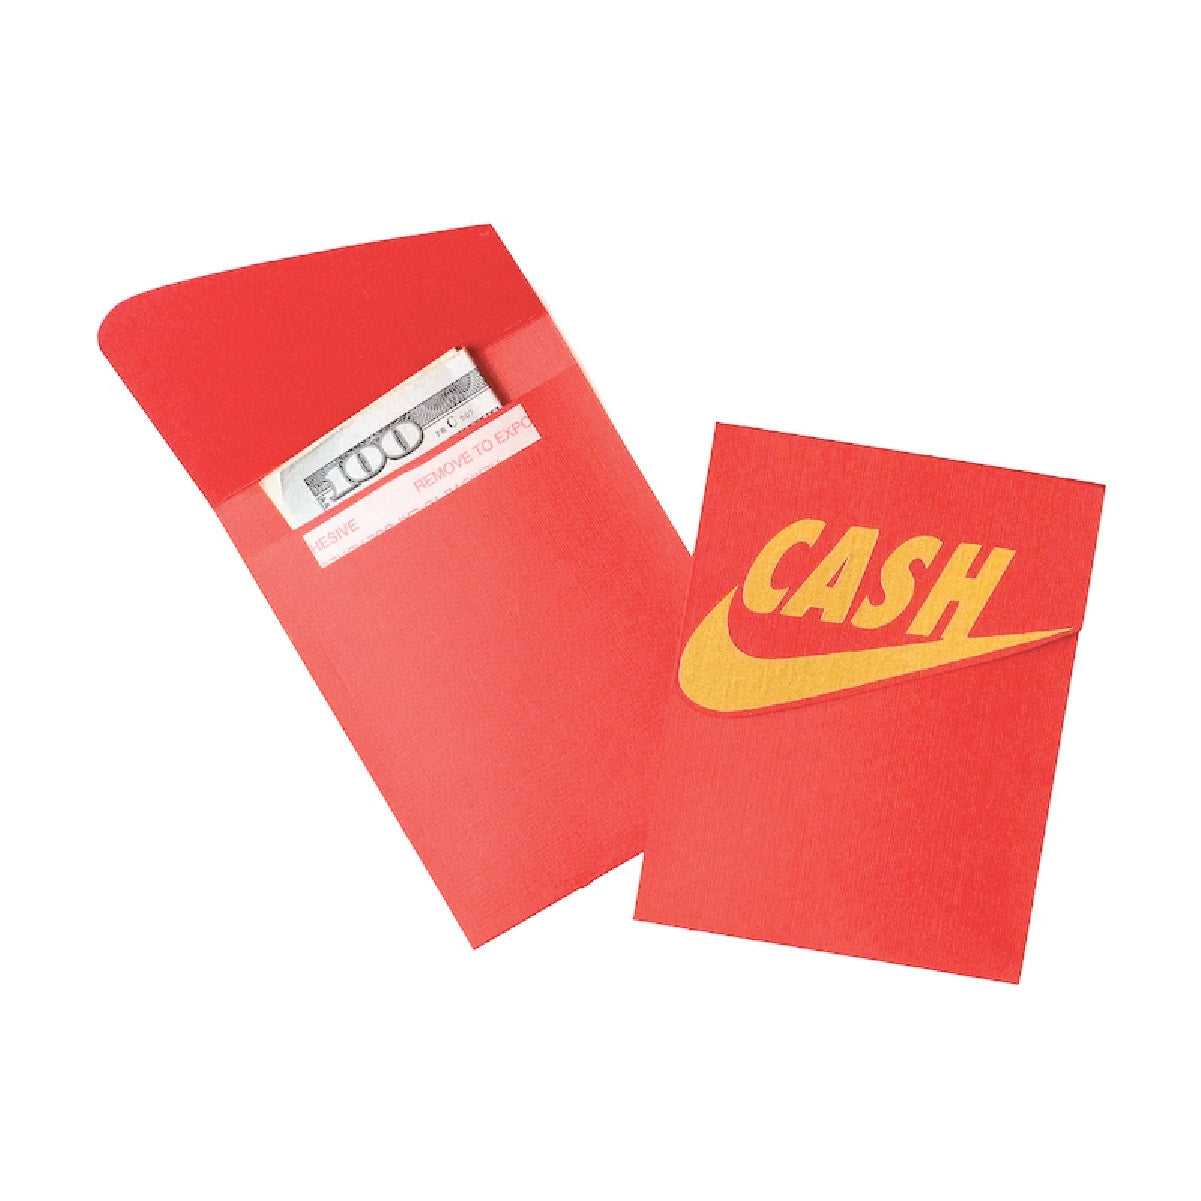 Bootleg Cash Checks Red Envelope